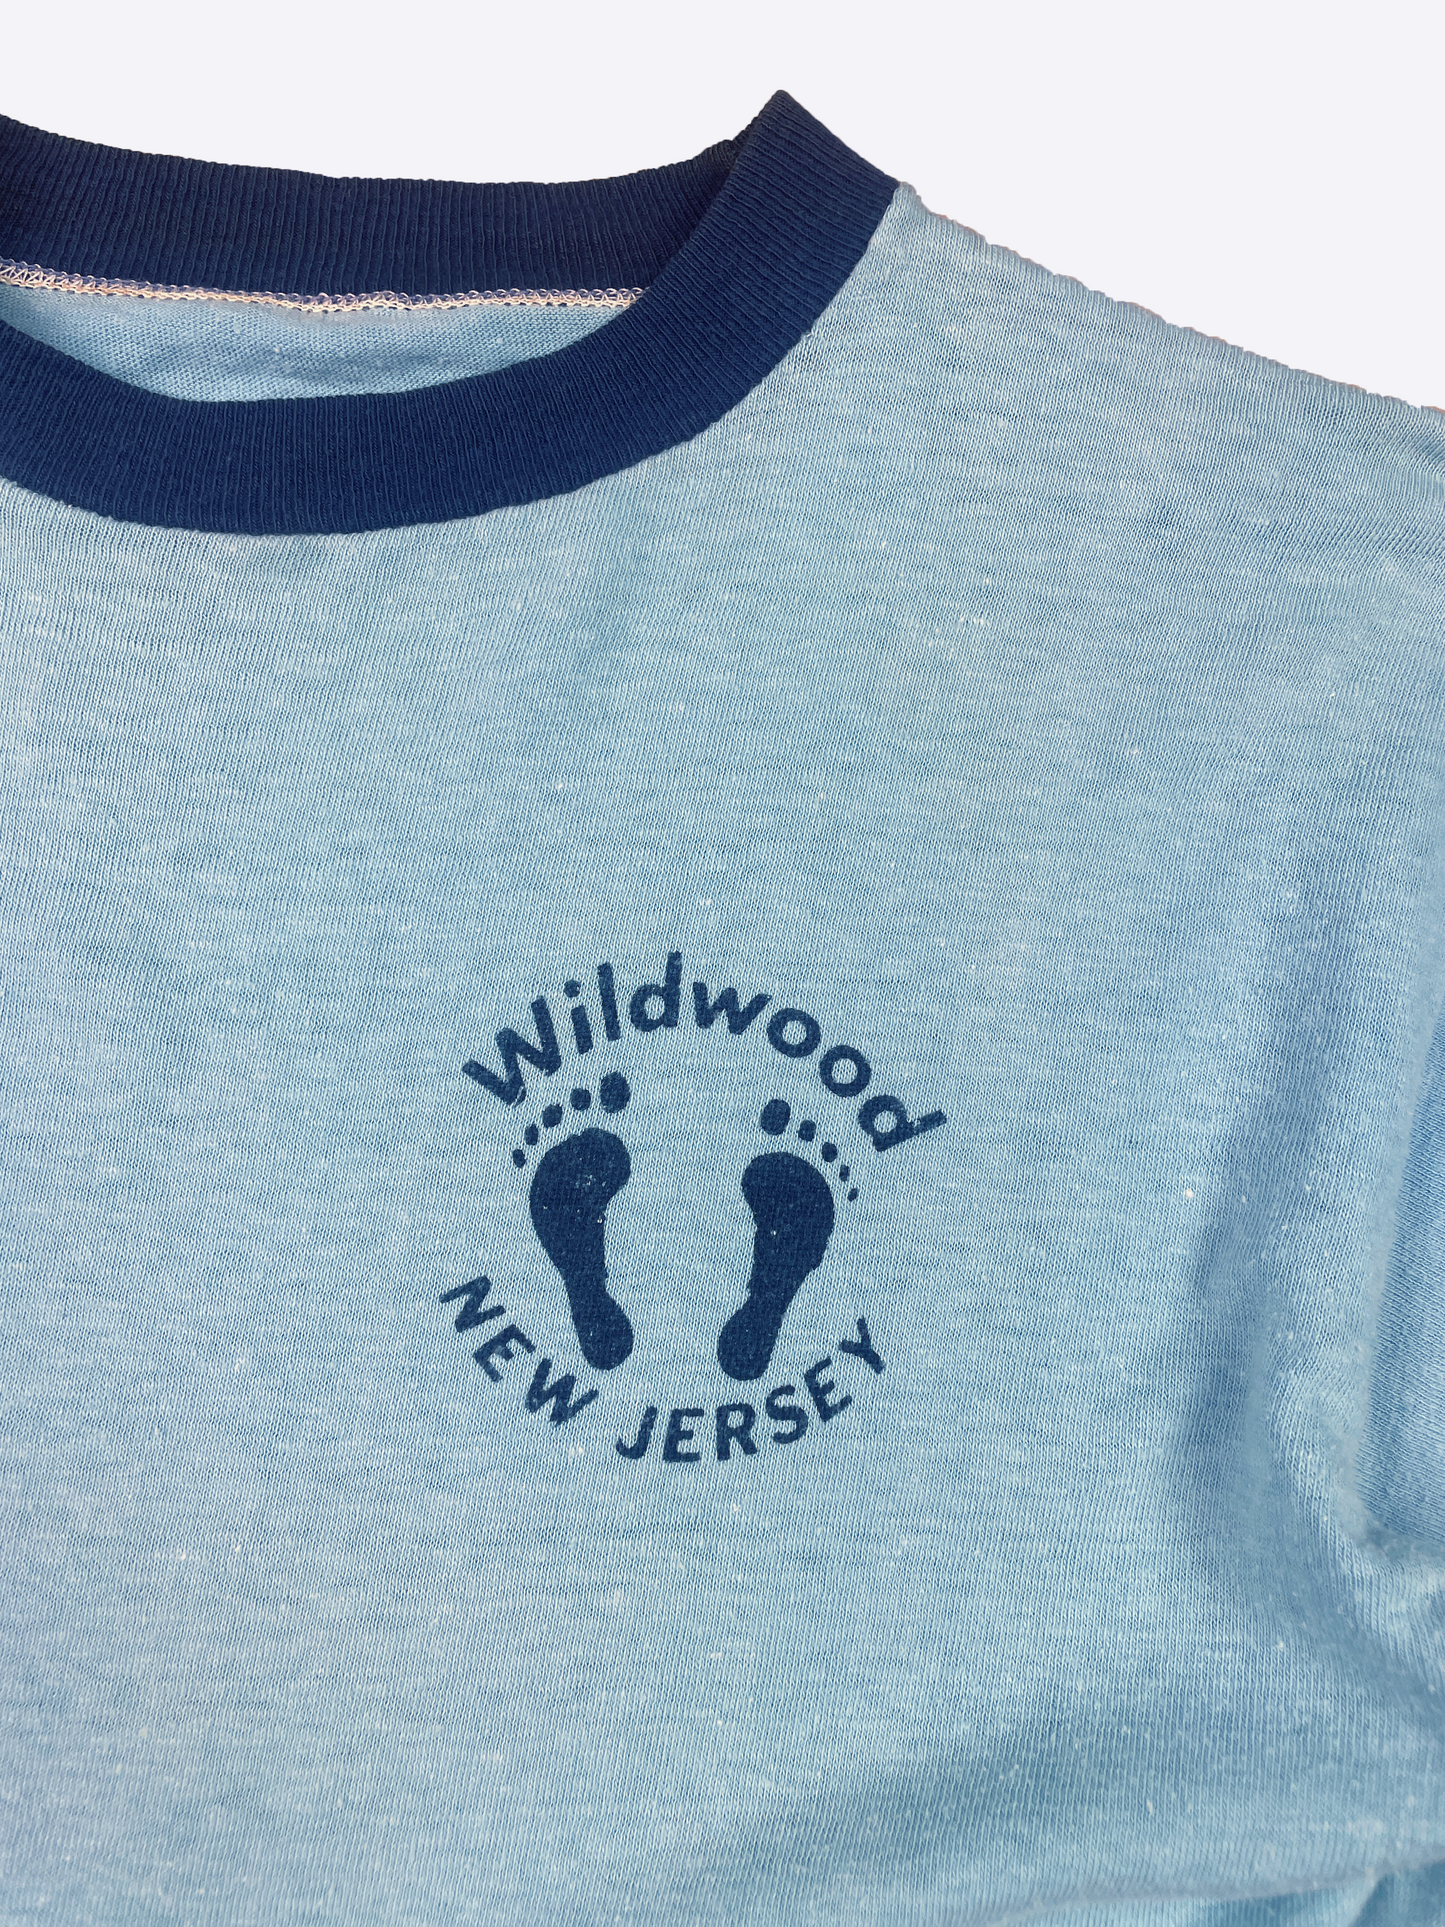 80s Wildwood New Jersey T-Shirt //M